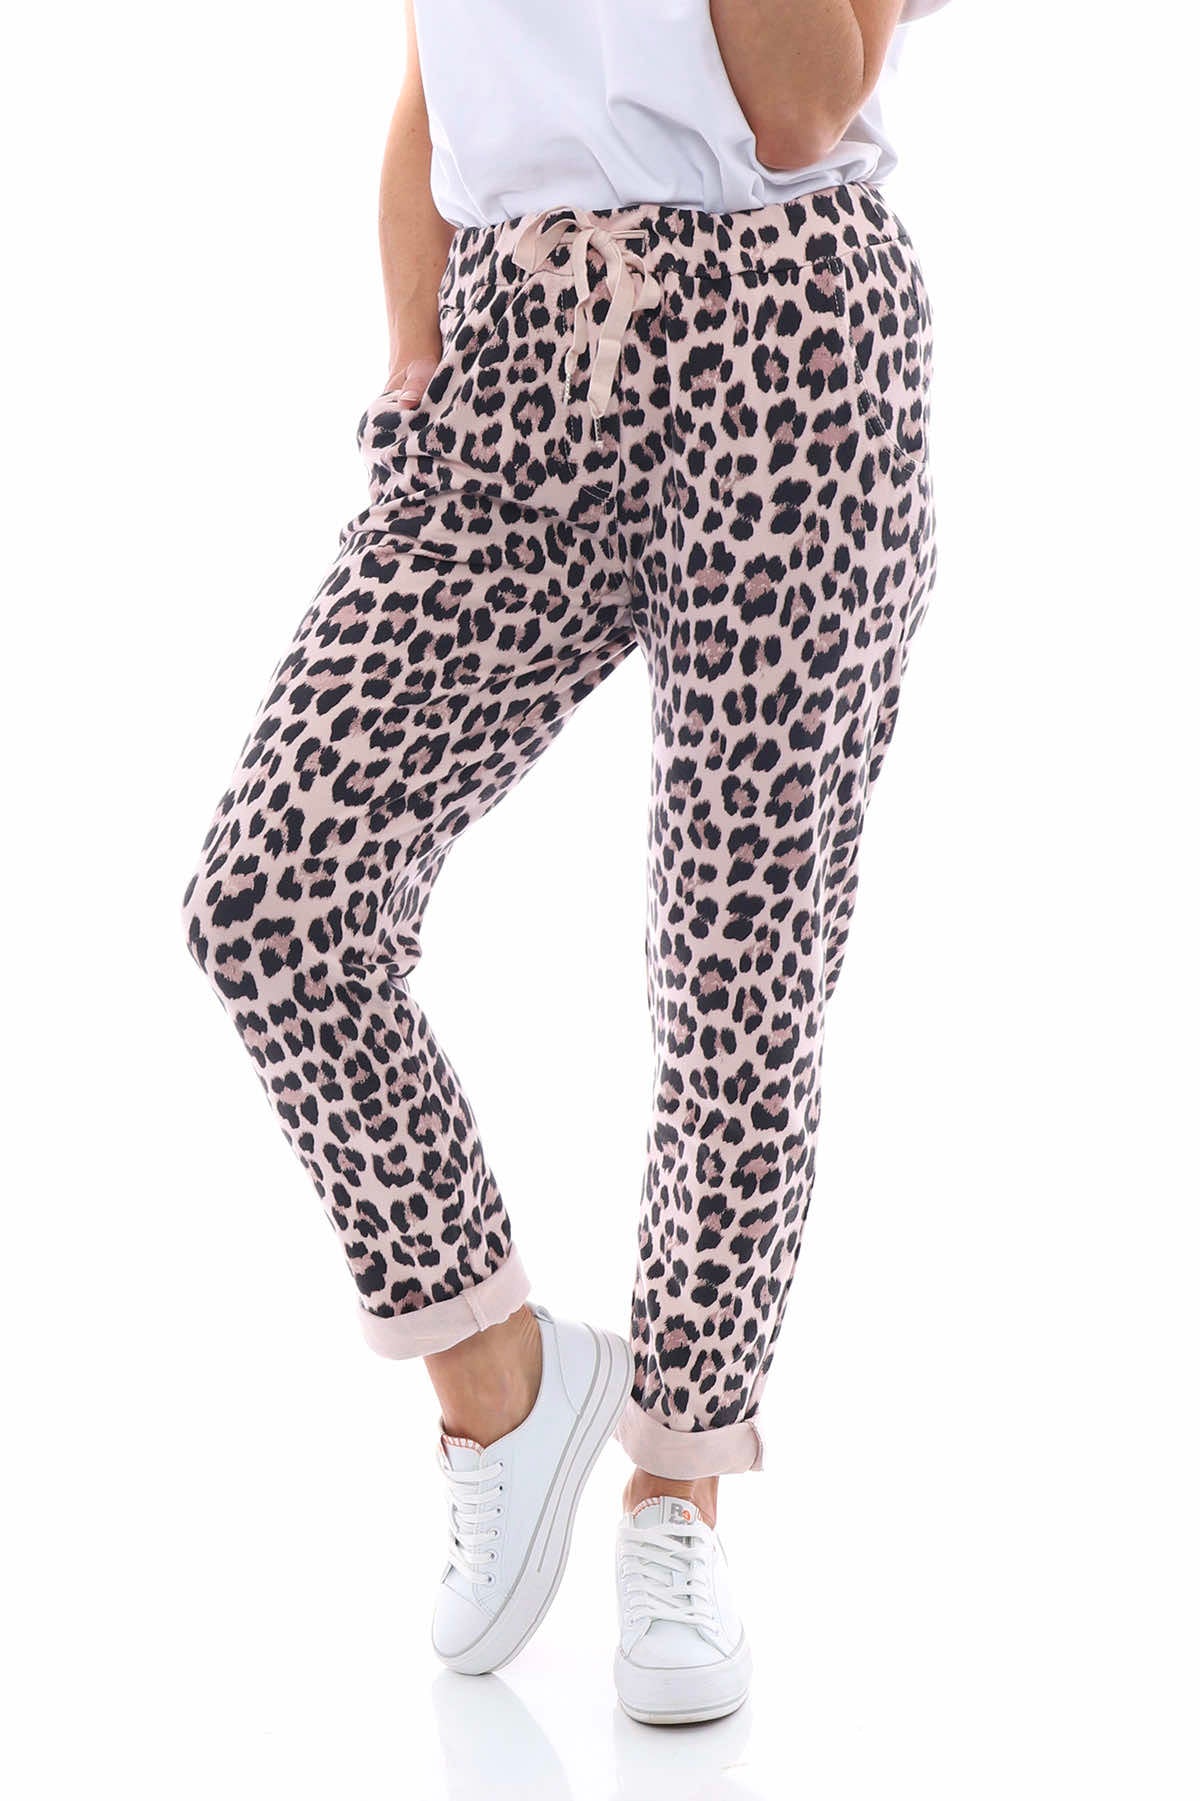 Minskip Leopard Print Jersey Pants Pink